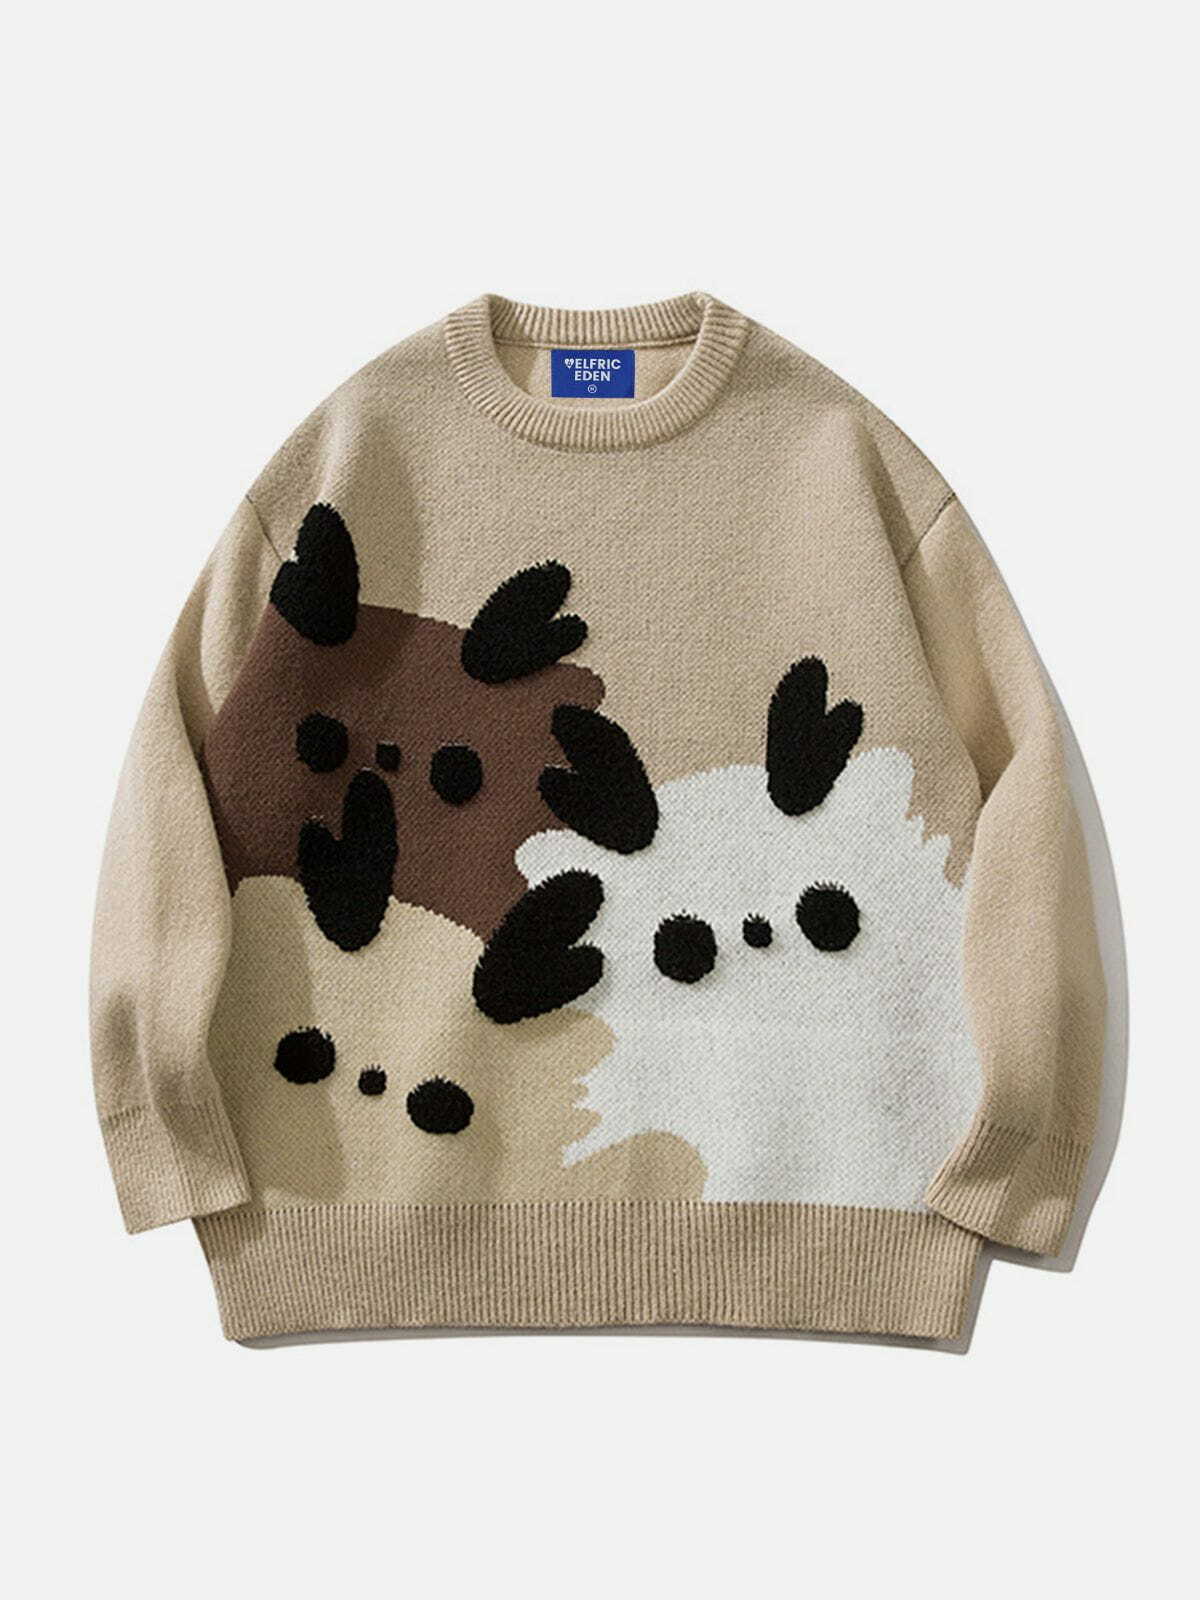 vibrant cartoon animal sweater urban fashion statement 6903